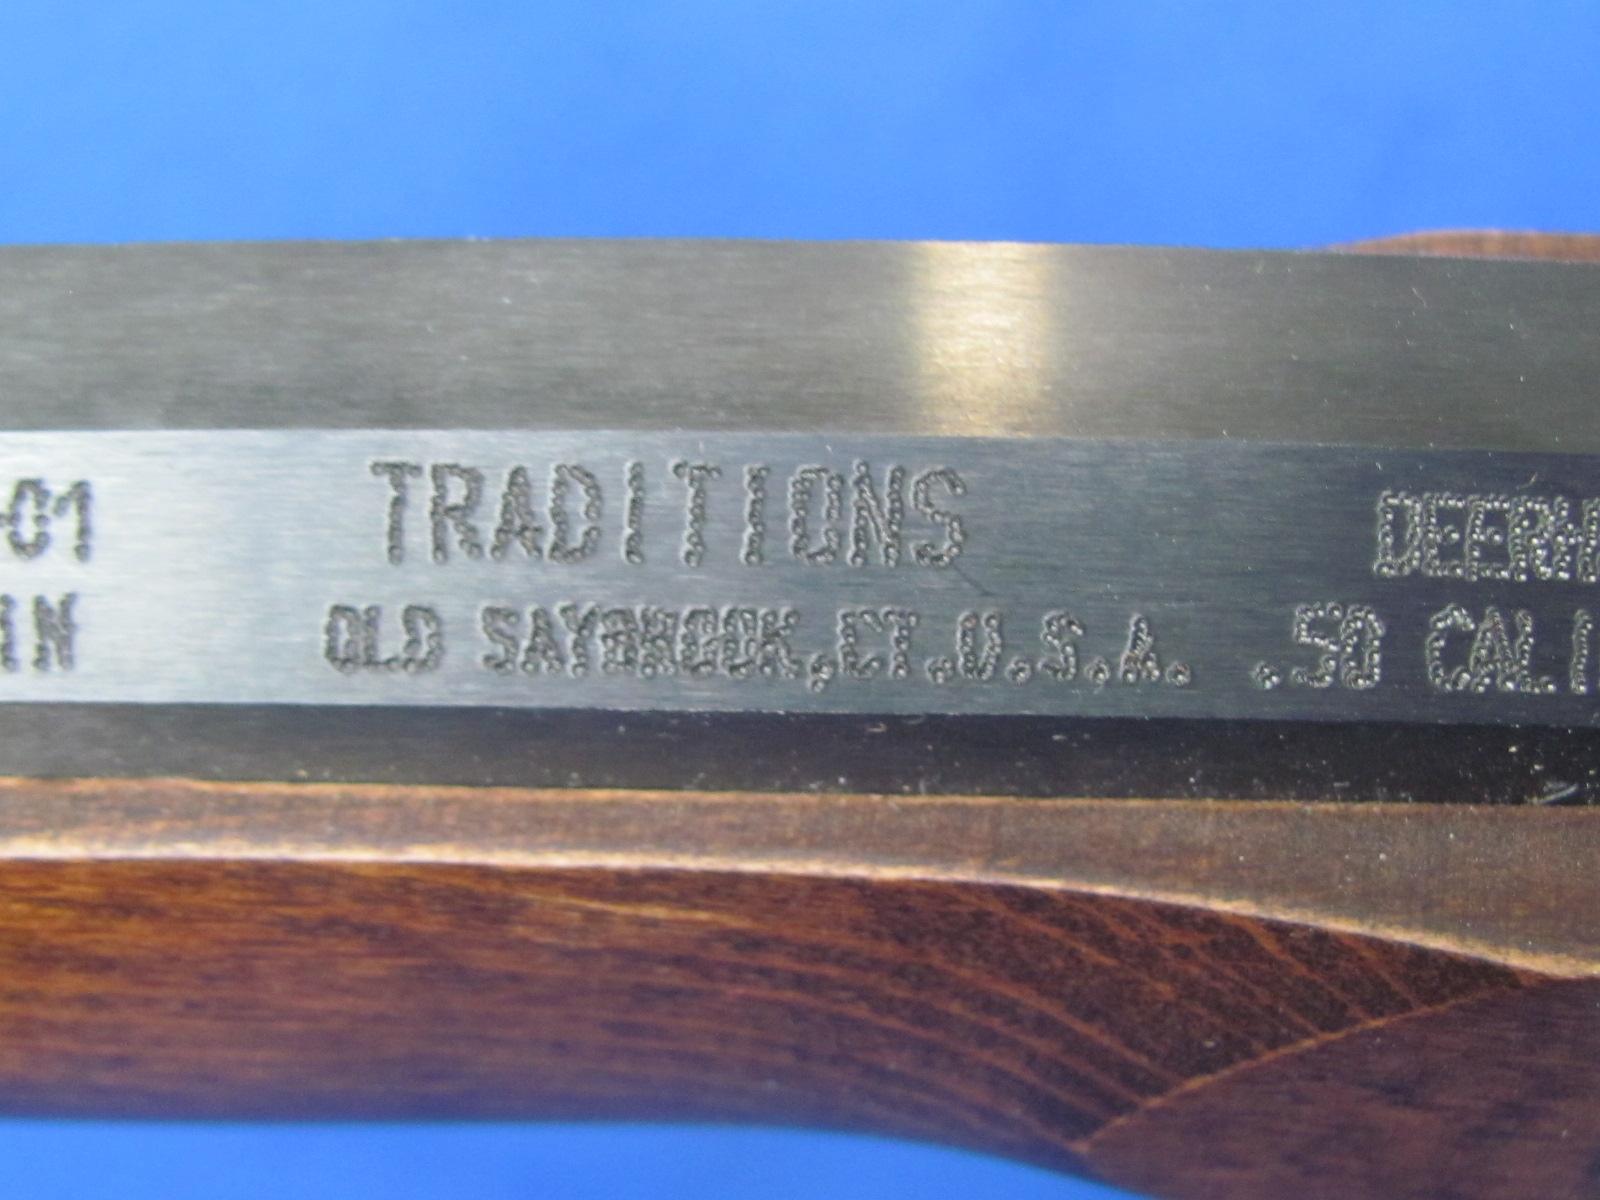 Traditions Mussleloader Deerhunter Left Handed Rifle - .50 Caliber – In Original Box